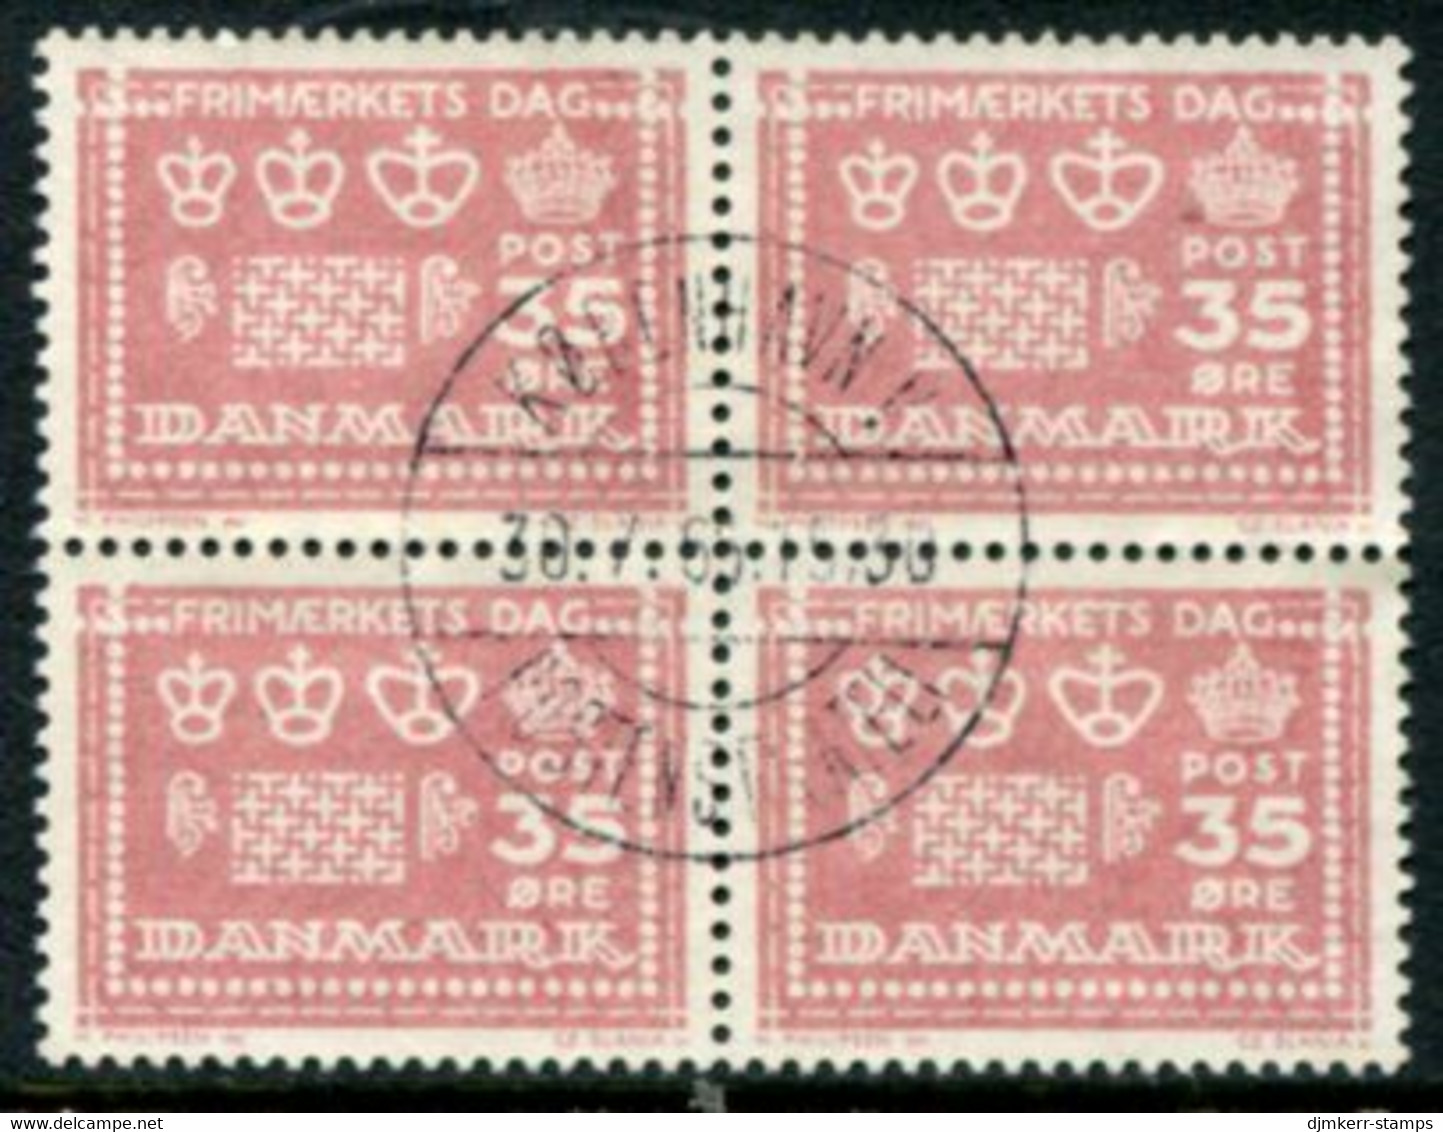 DENMARK 1964 Stamp Day Block Of 4 Used   Michel 425y - Usado